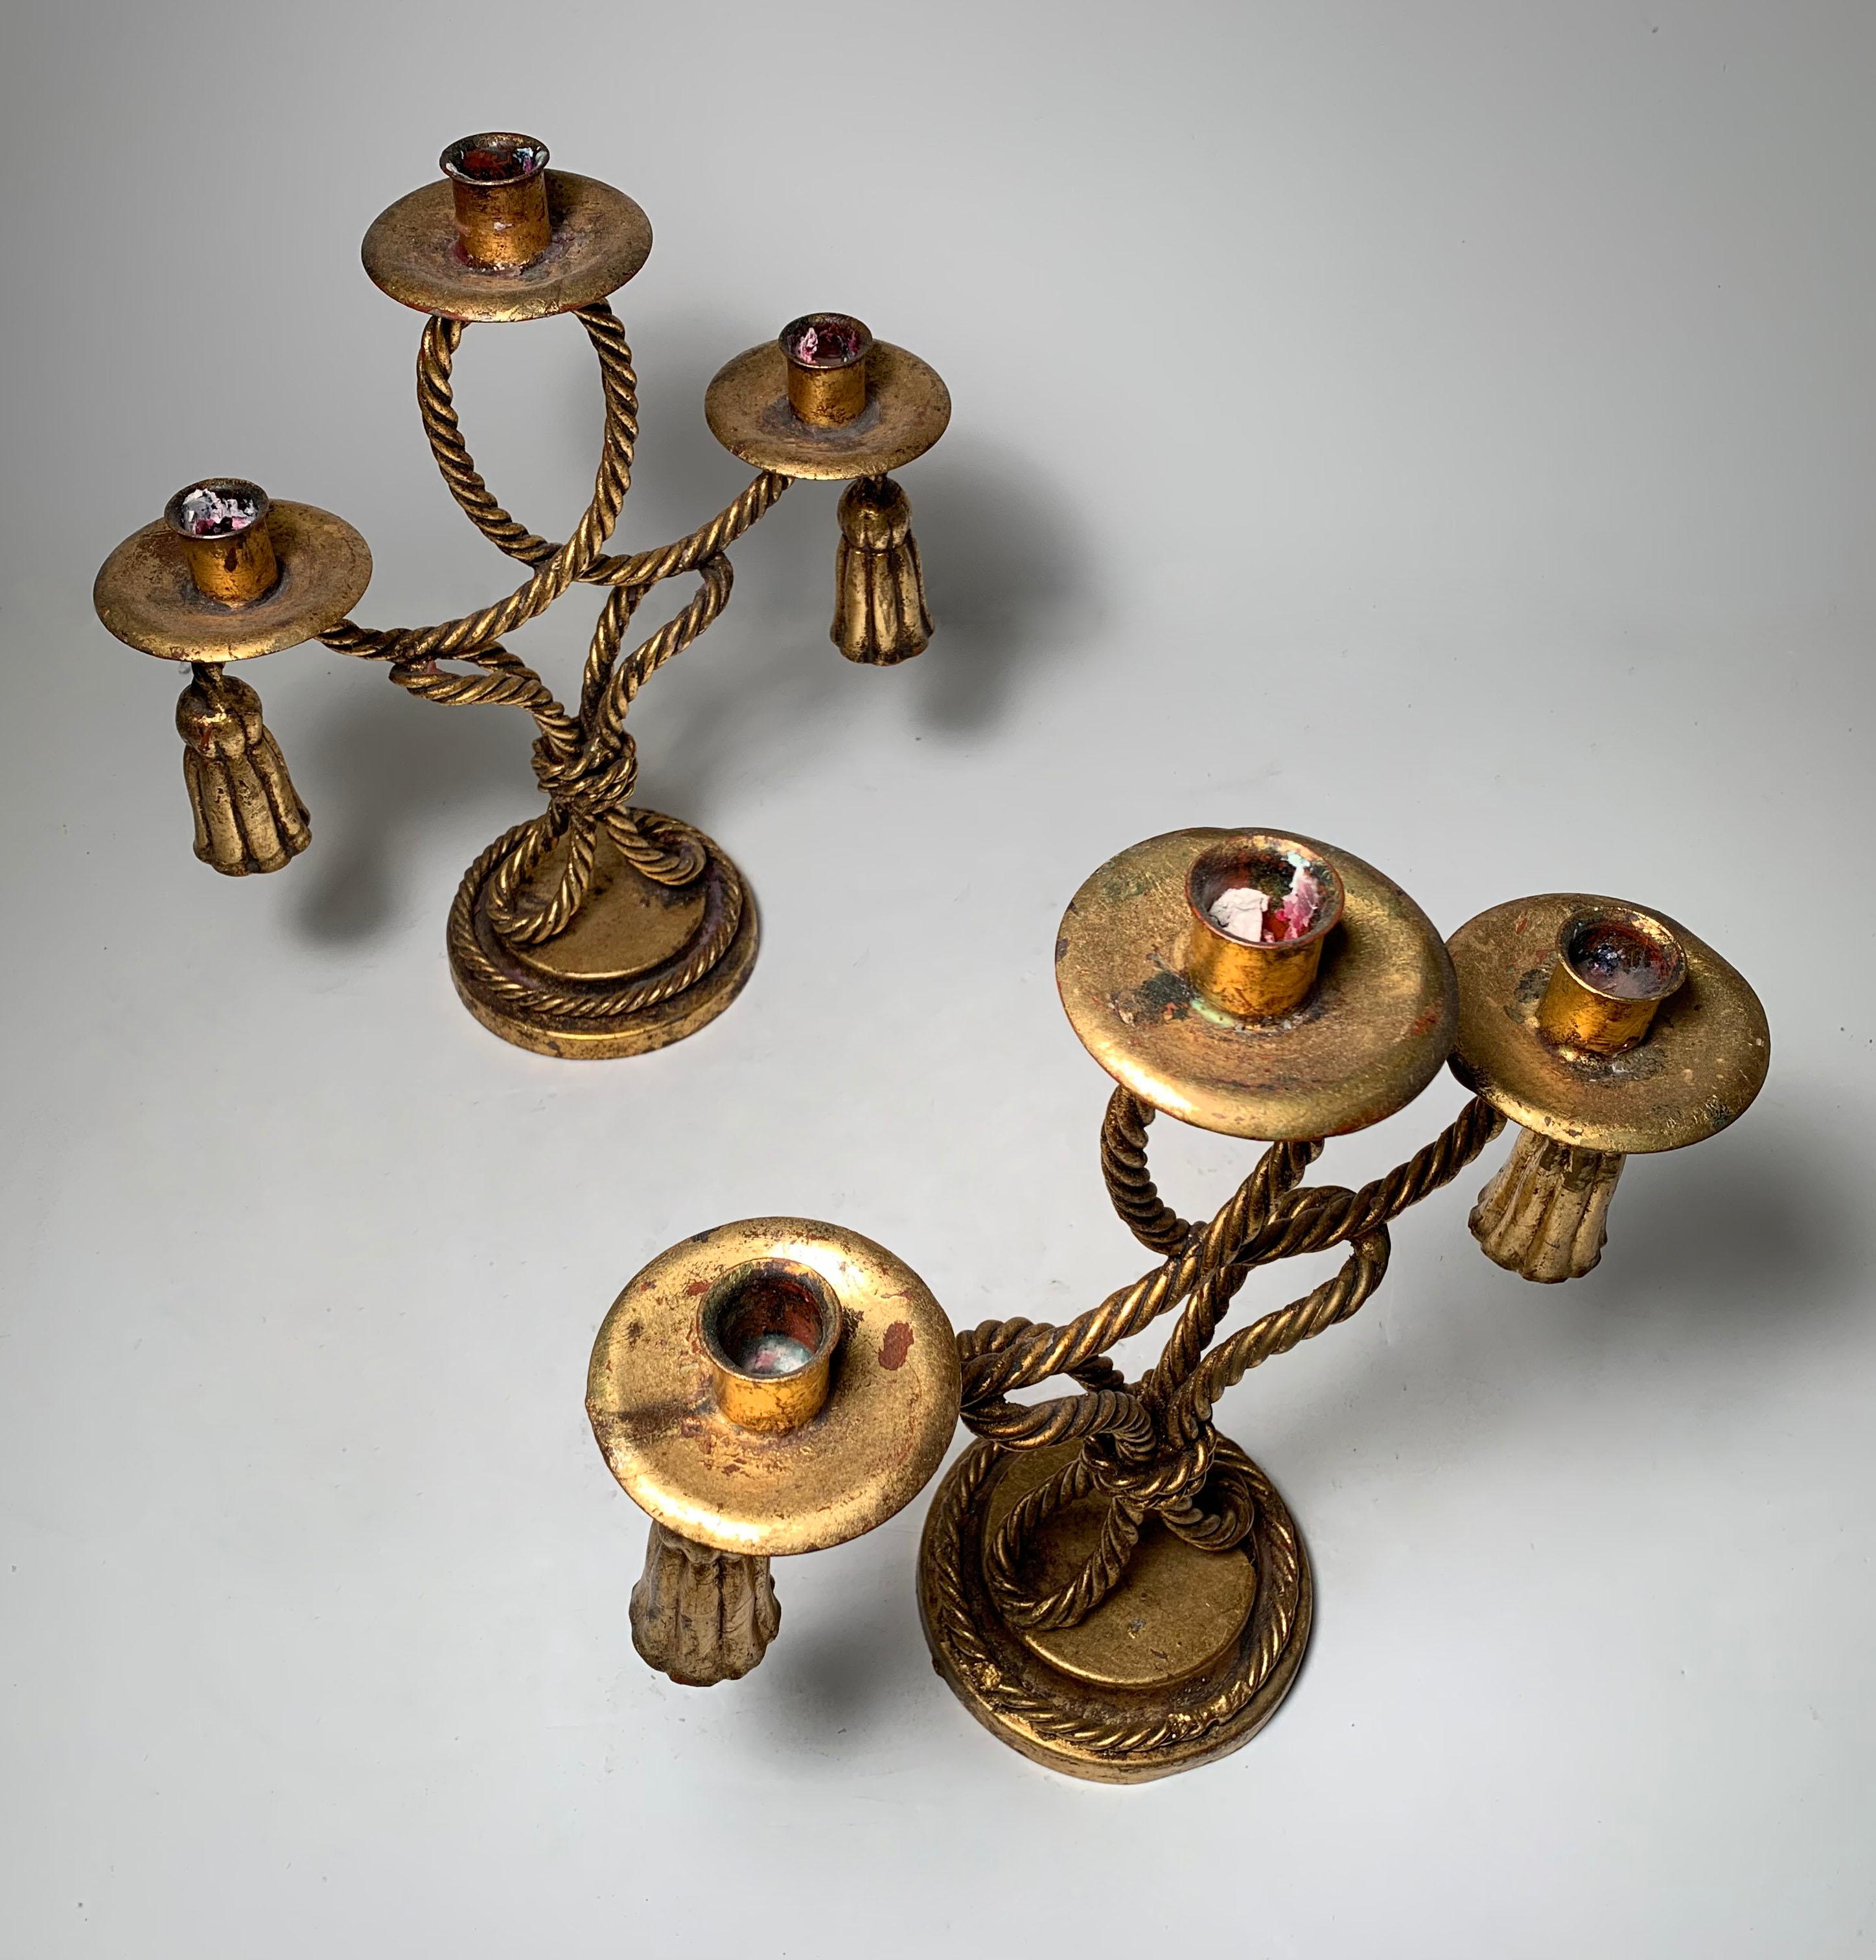 Vintage Italian gilt decorative toleware rope and tassle candlesticks.